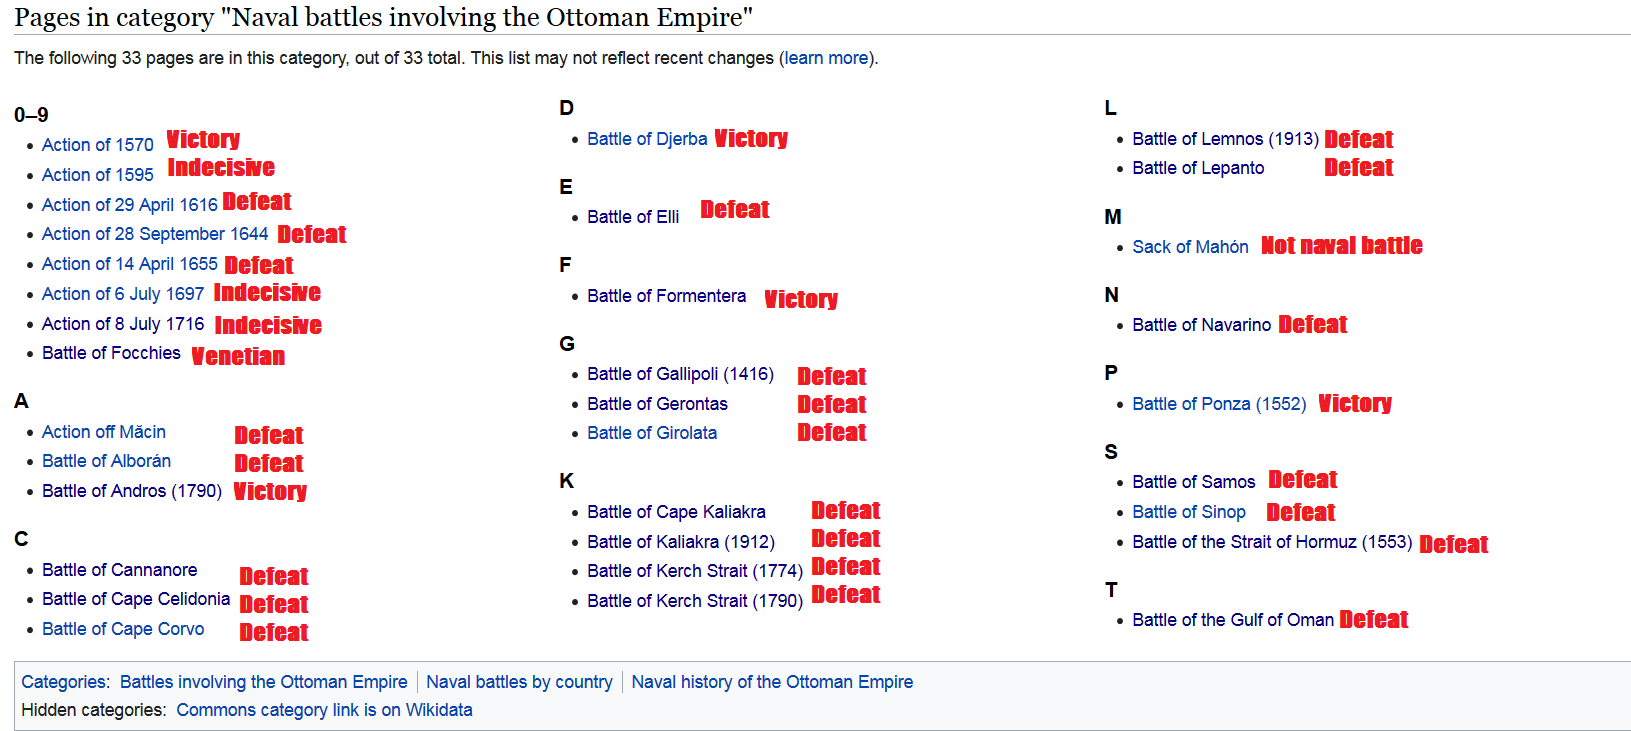 Screenshot_2021-11-12 Category Naval battles involving the Ottoman Empire - Wikipedia.png